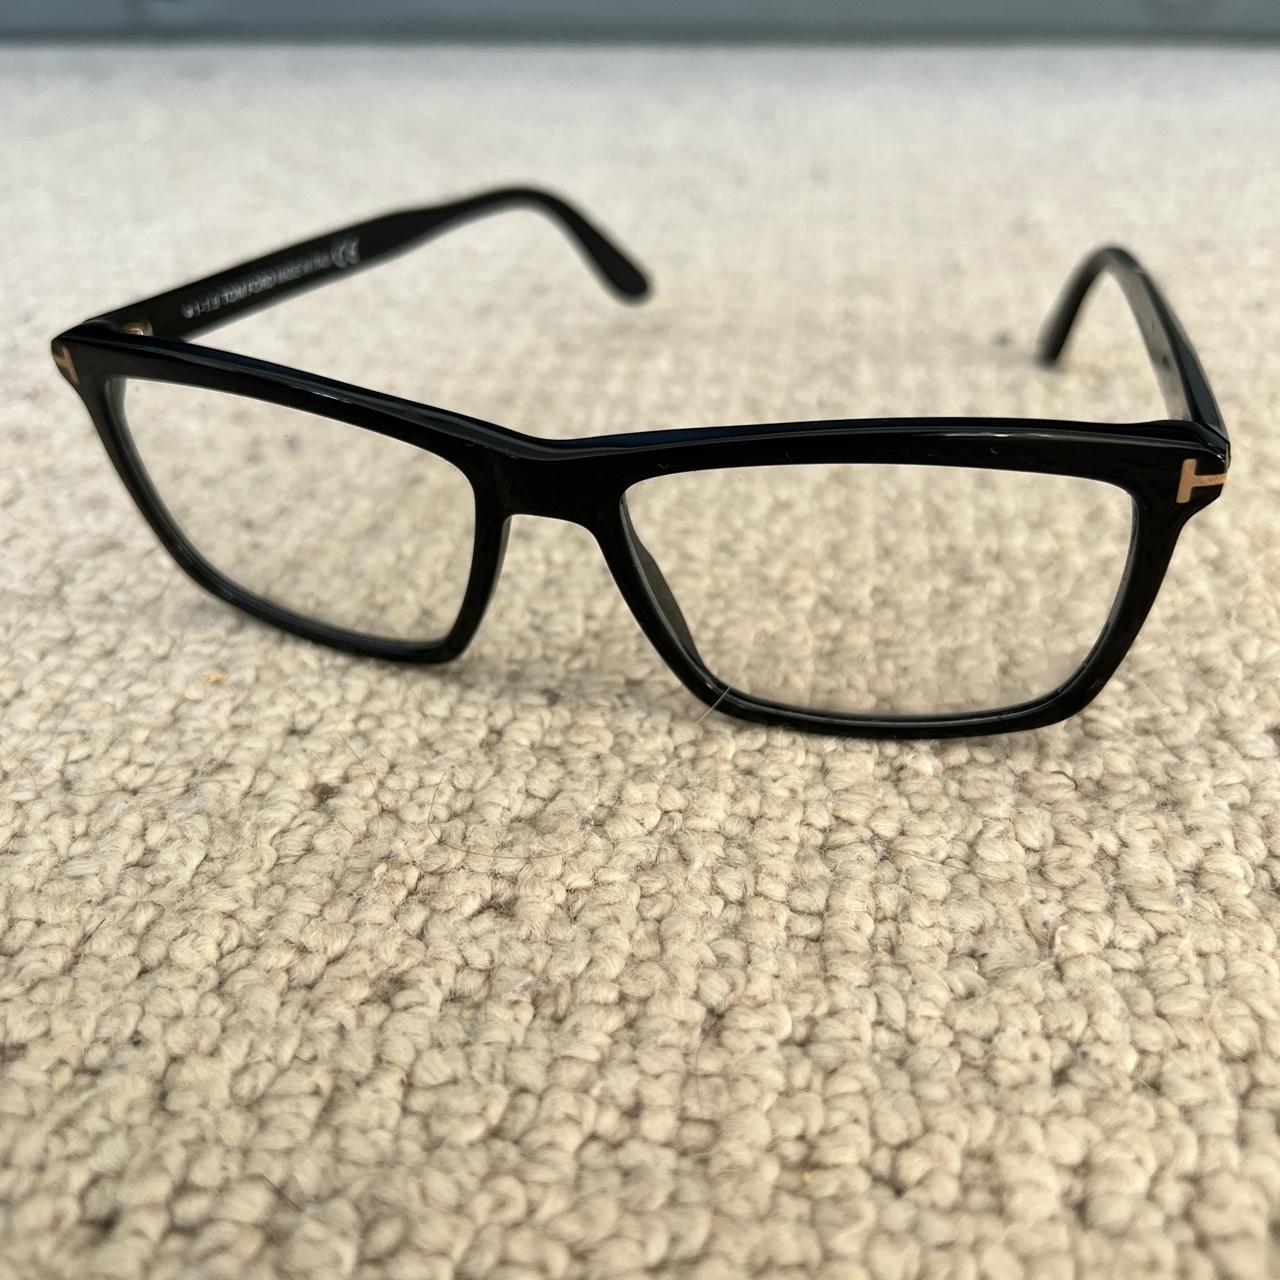 Tom Ford clear lense glasses no prescription Can be... - Depop